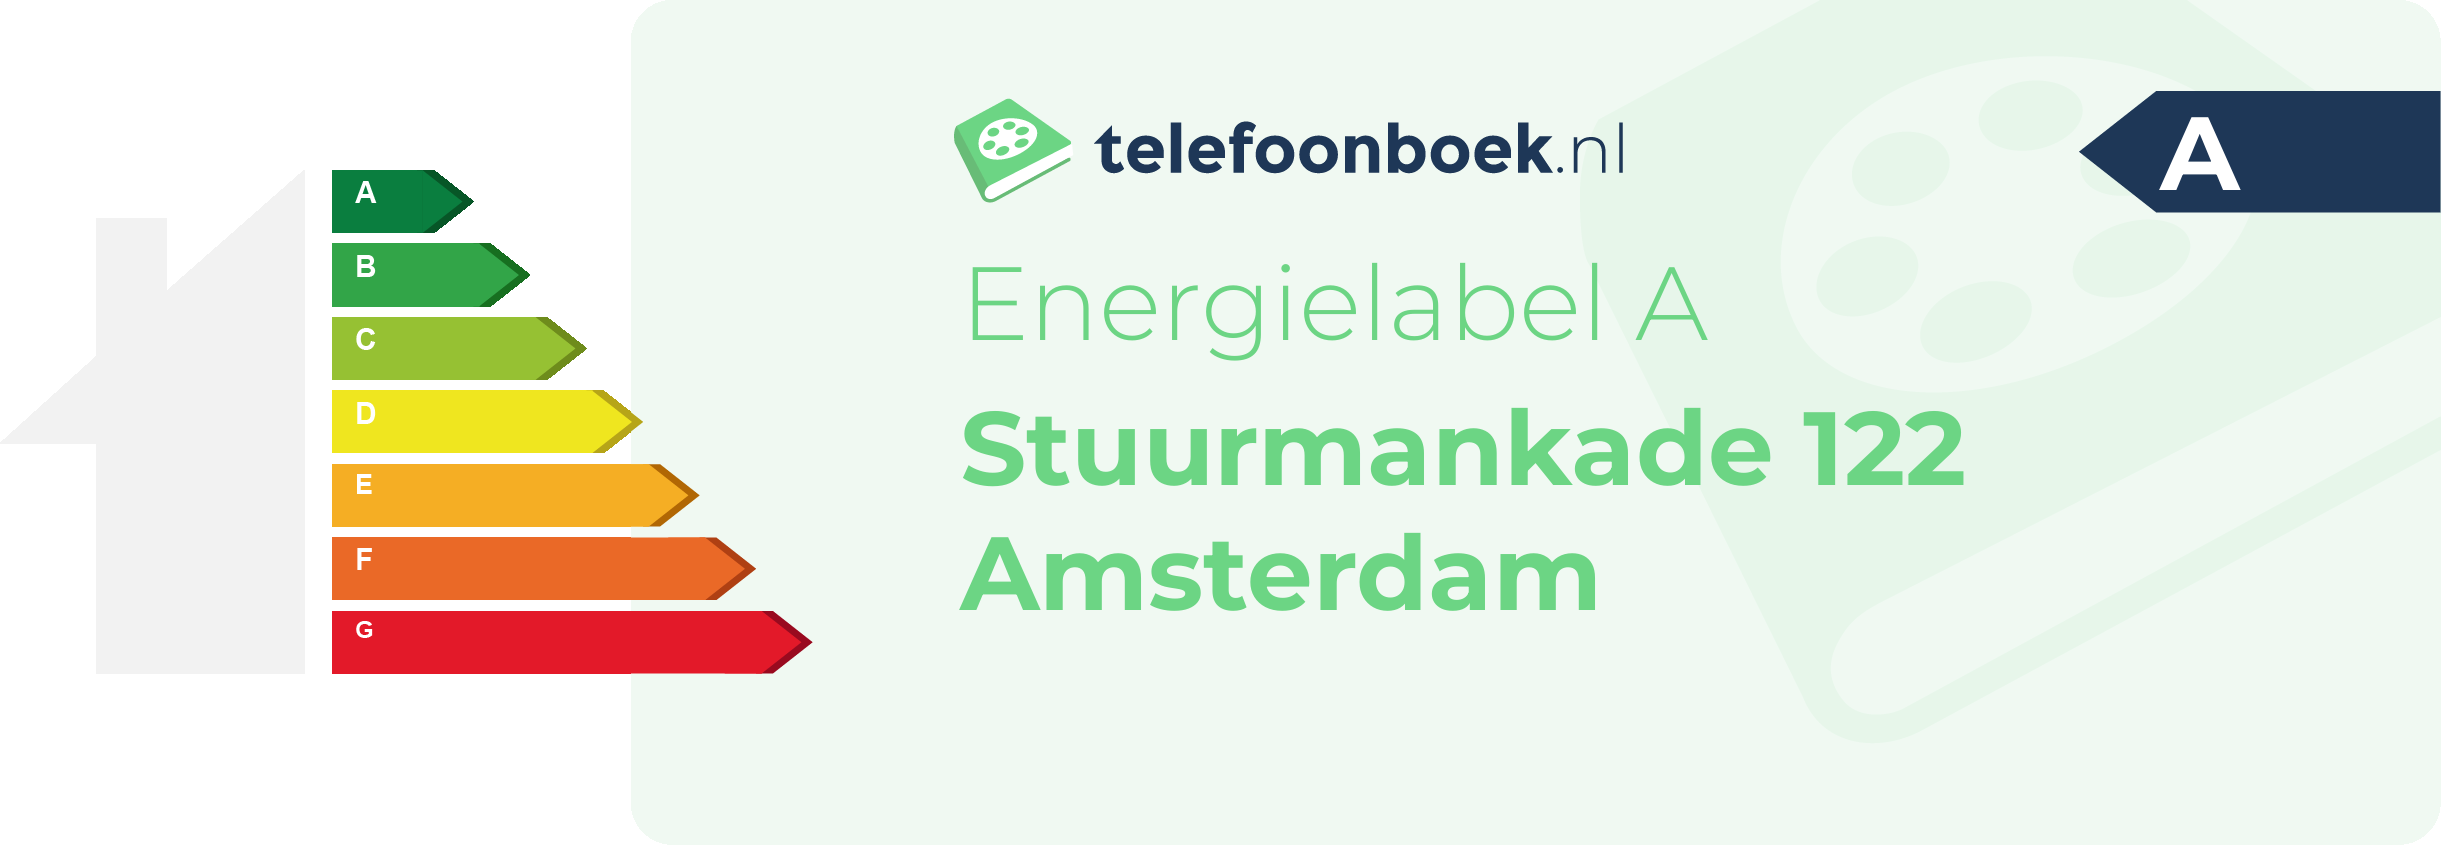 Energielabel Stuurmankade 122 Amsterdam